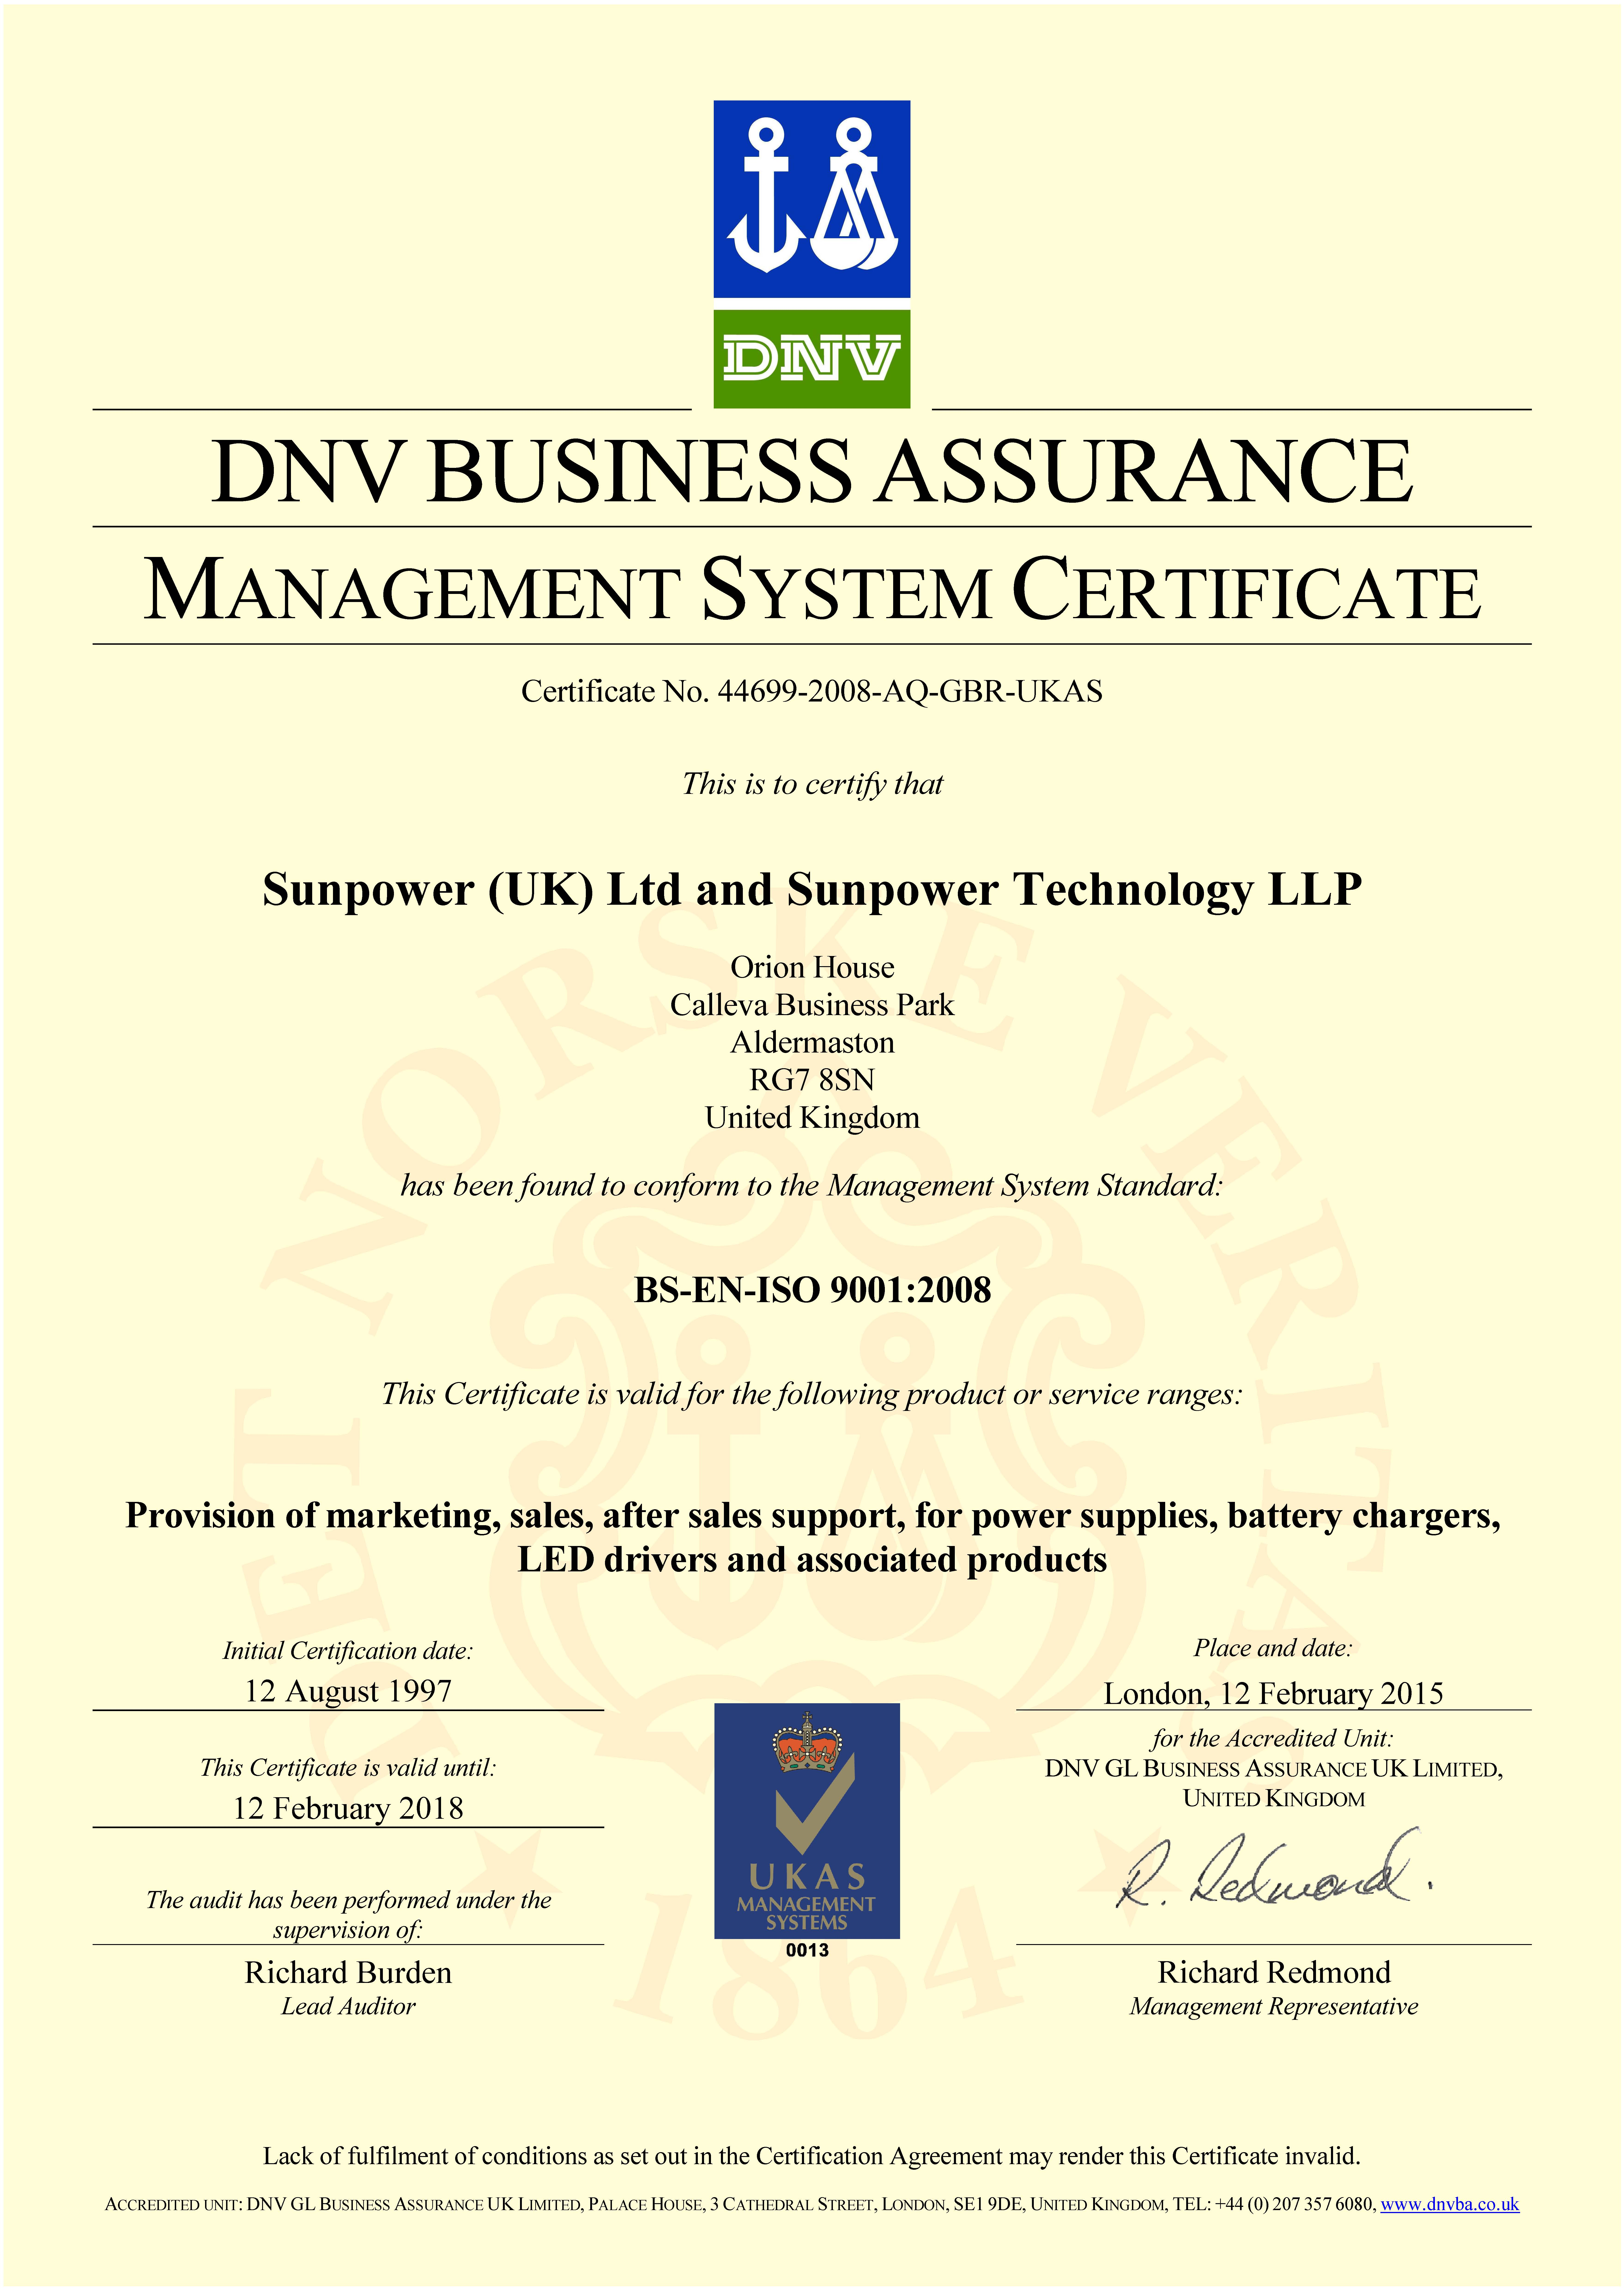 Sunpower ISO 9000 Certificate Sunpower UK